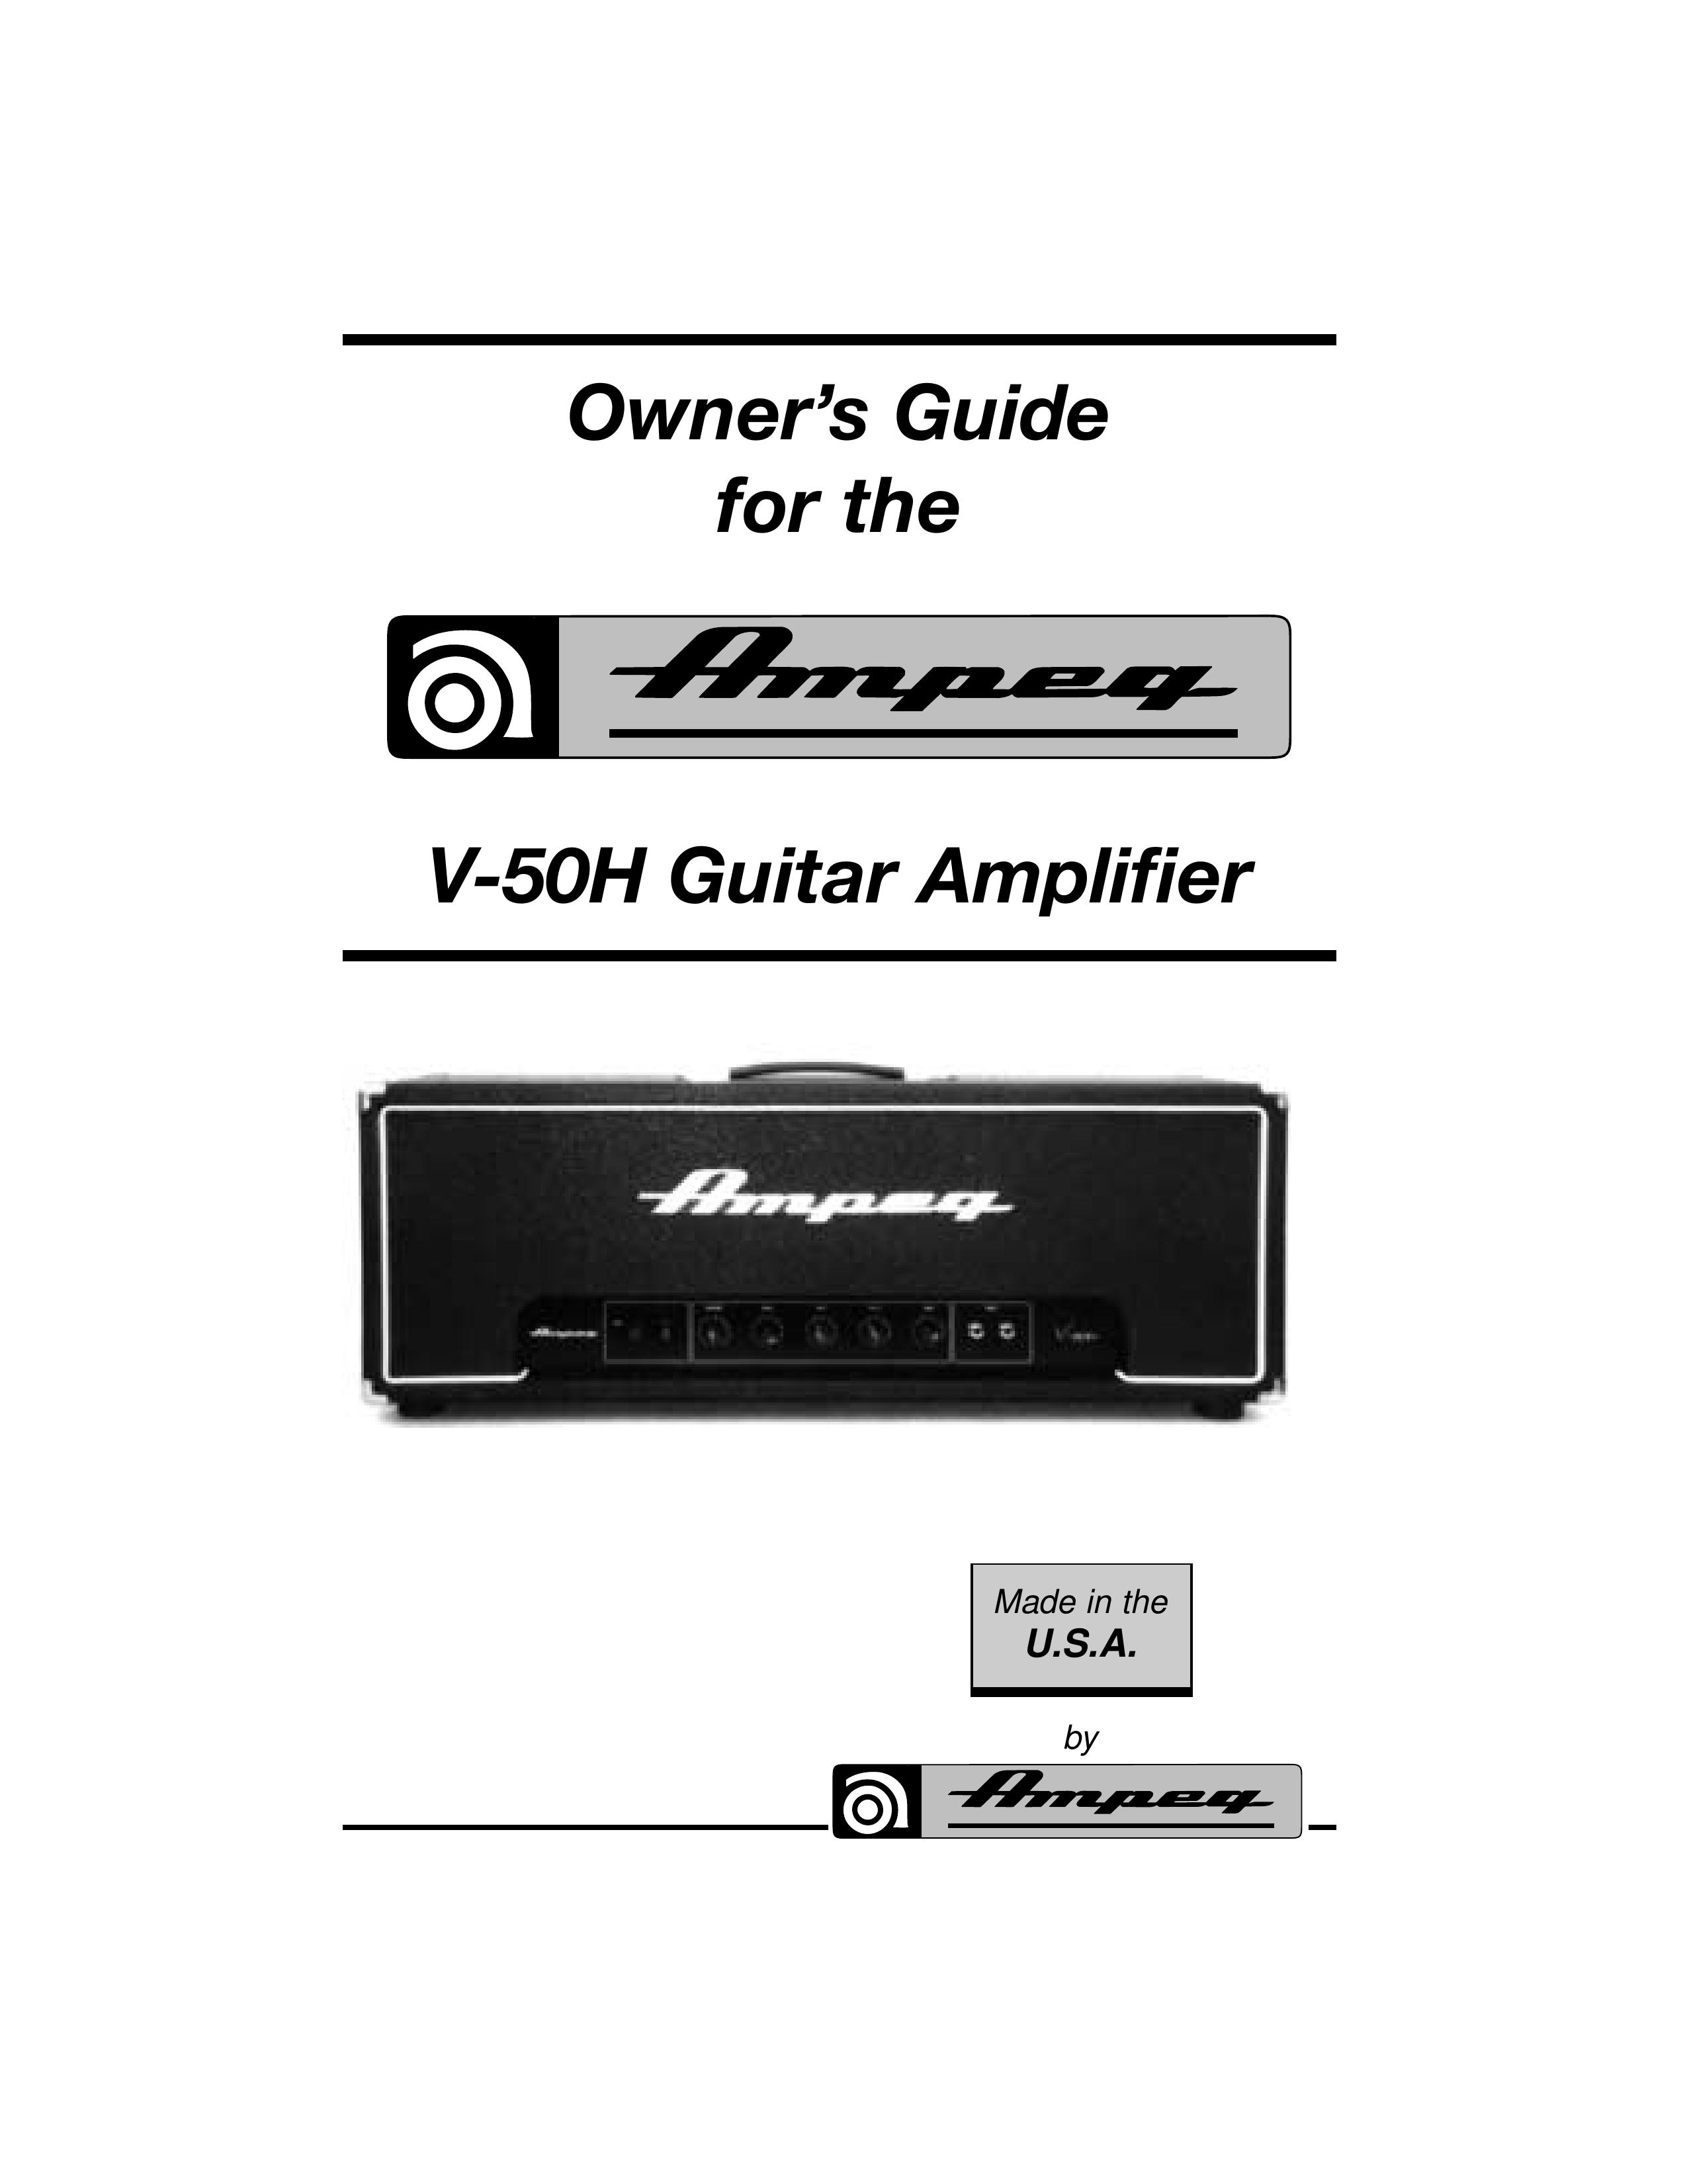 Ampeg V-50H Musical Instrument Amplifier User Manual (Page 1)